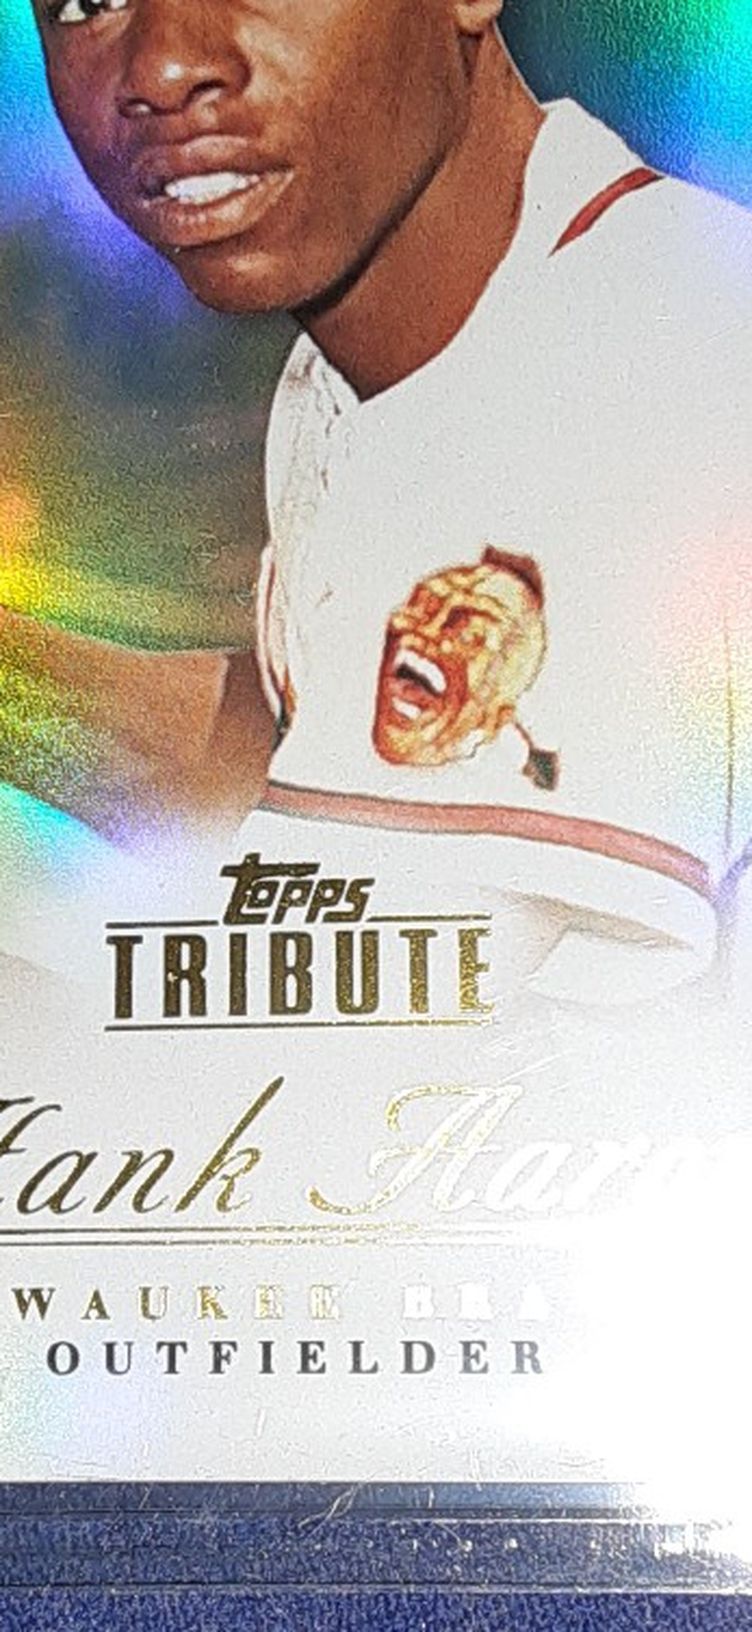 Very Nice Hank Aaron Tribute Card